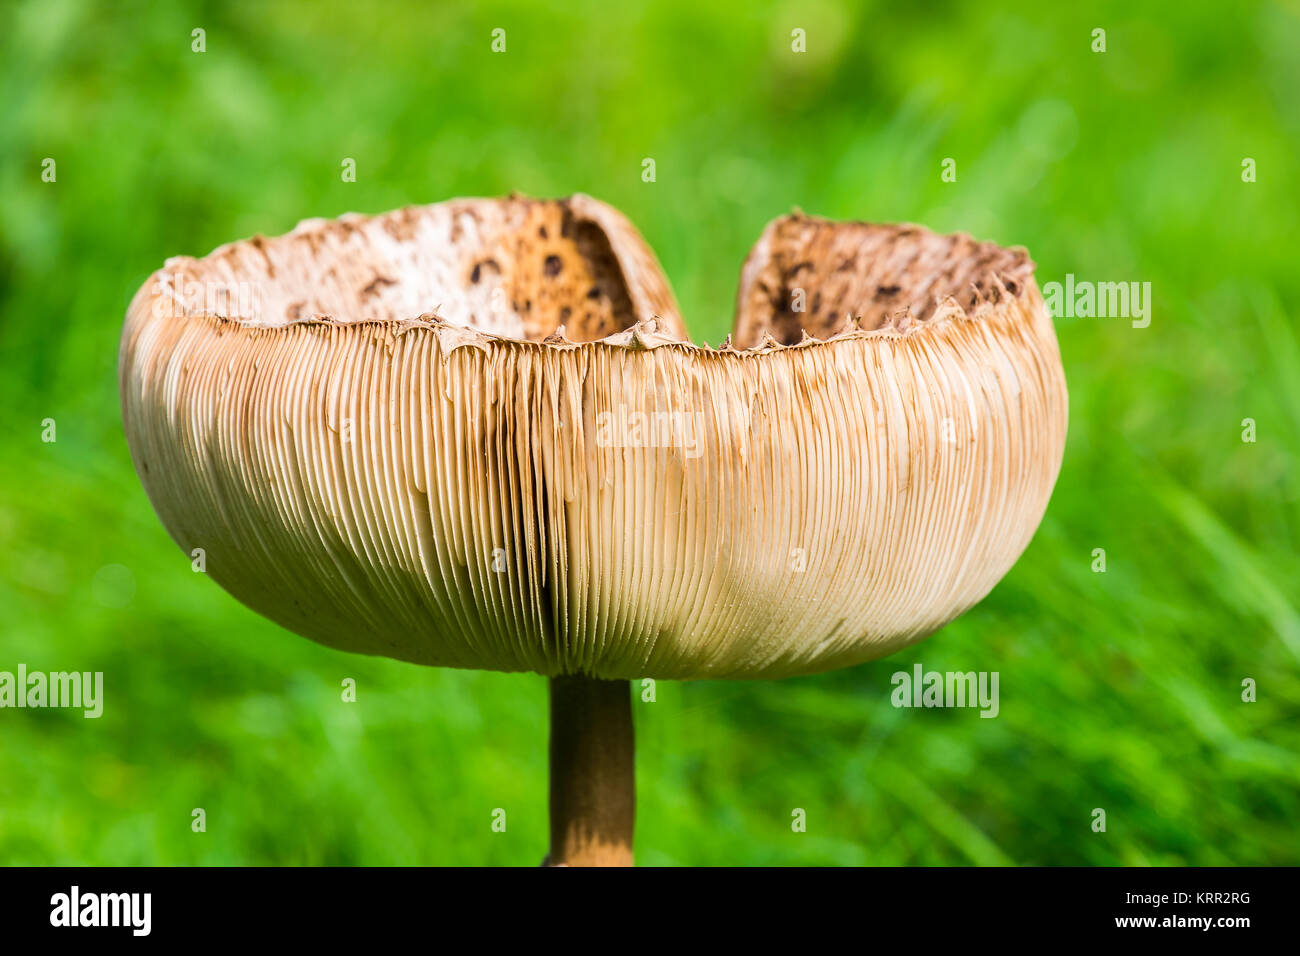 Chiusura del fungo marrone in erba verde Foto Stock